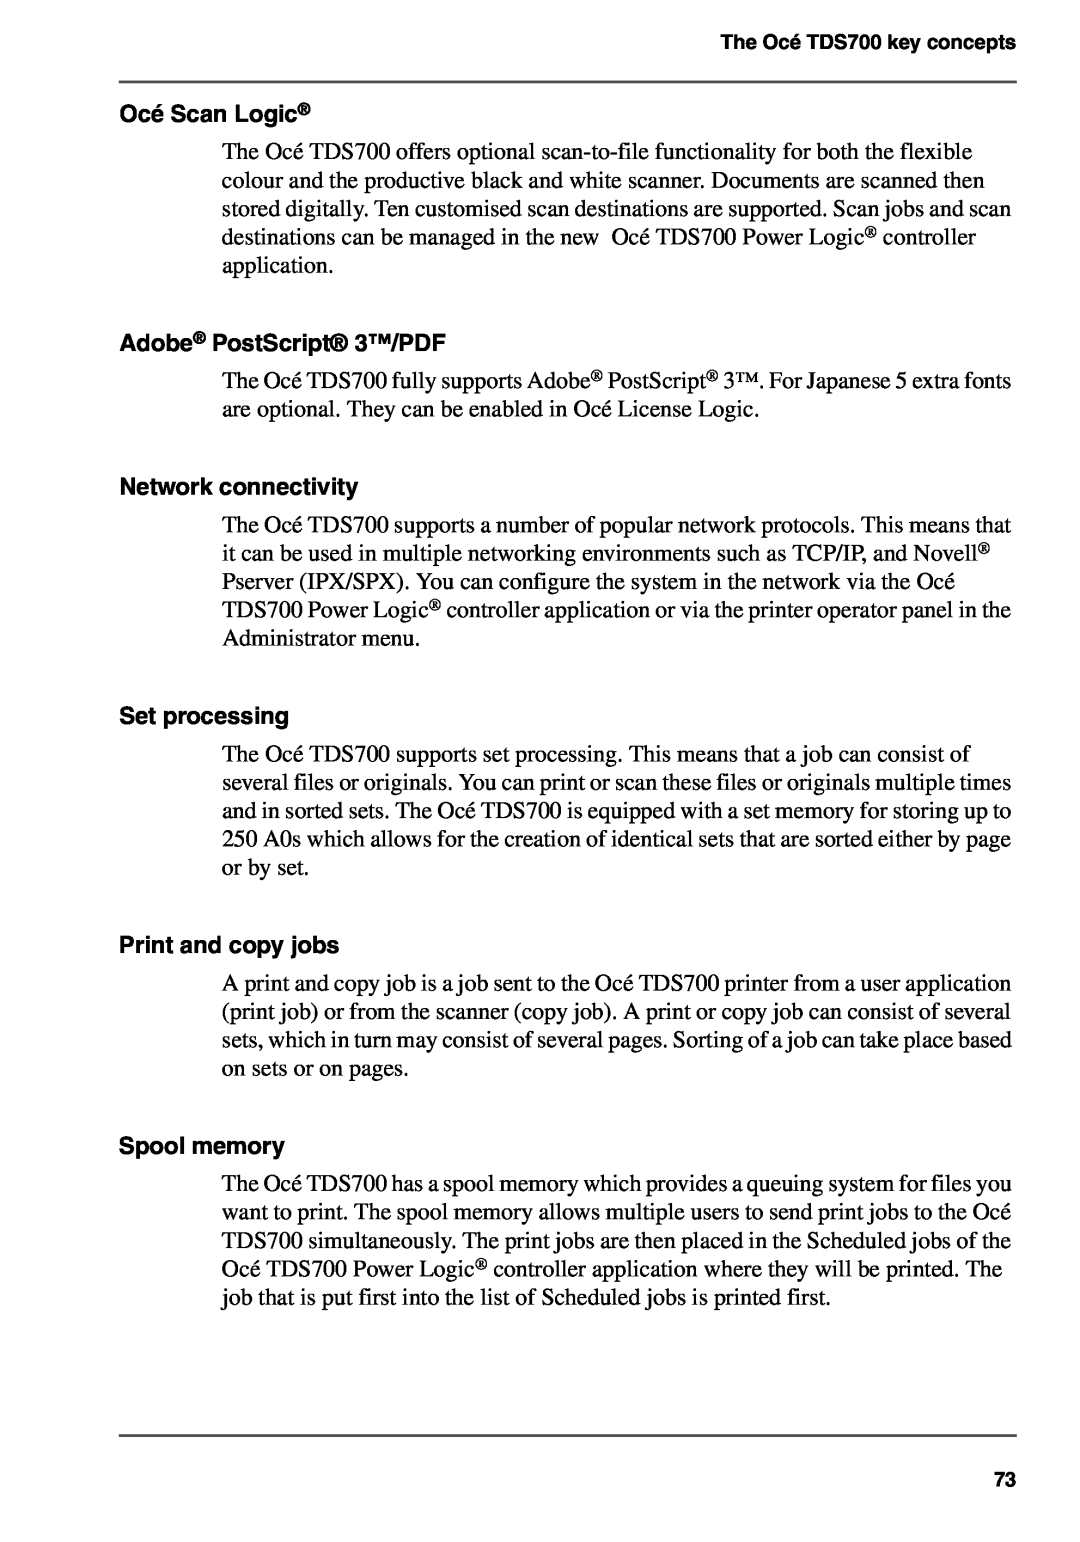 Oce North America TDS700 Océ Scan Logic, Adobe PostScript 3/PDF, Network connectivity, Set processing, Print and copy jobs 